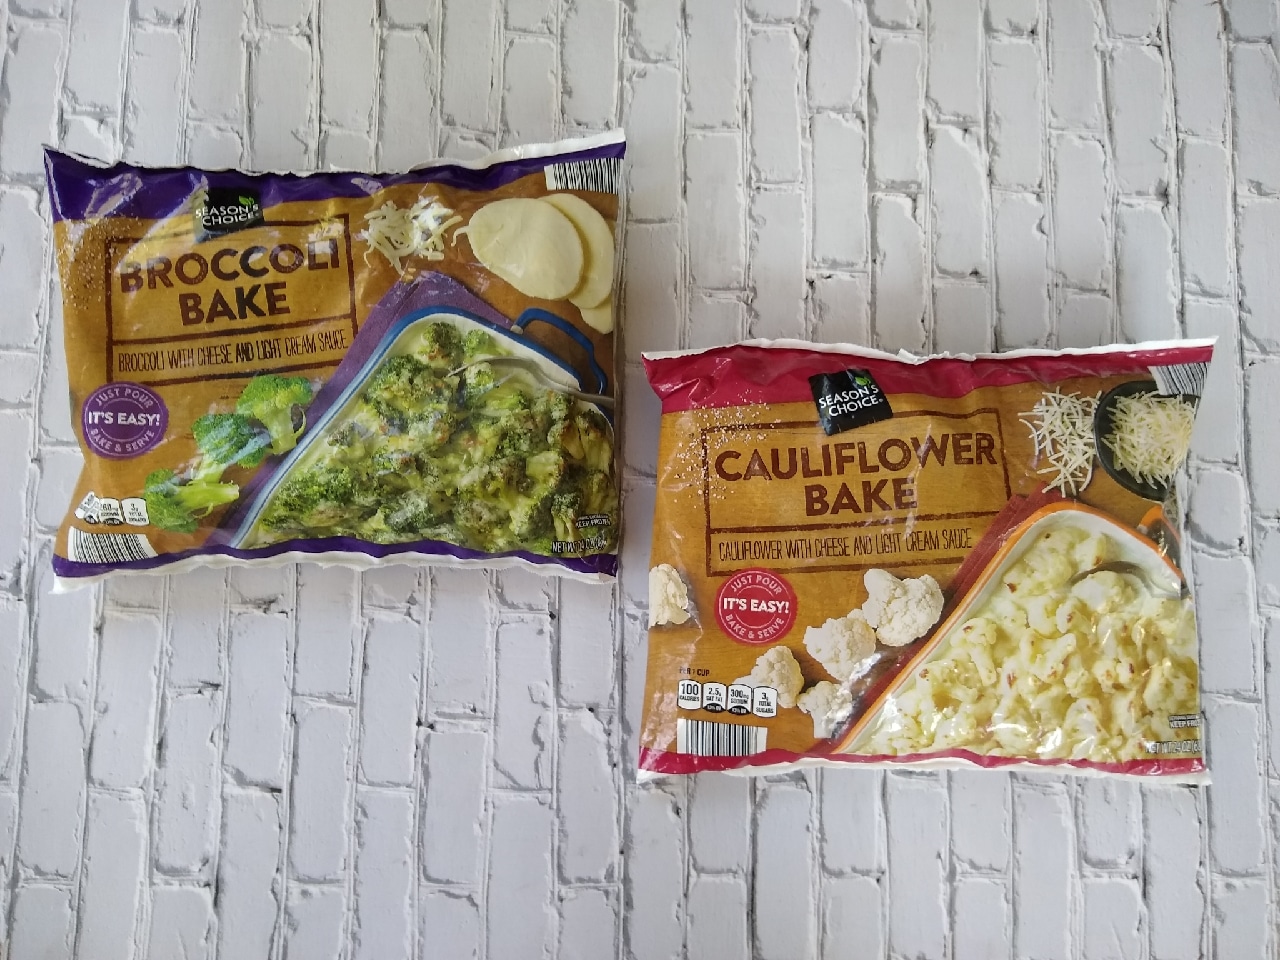 Season's Choice Broccoli Bake or Cauliflower Bake